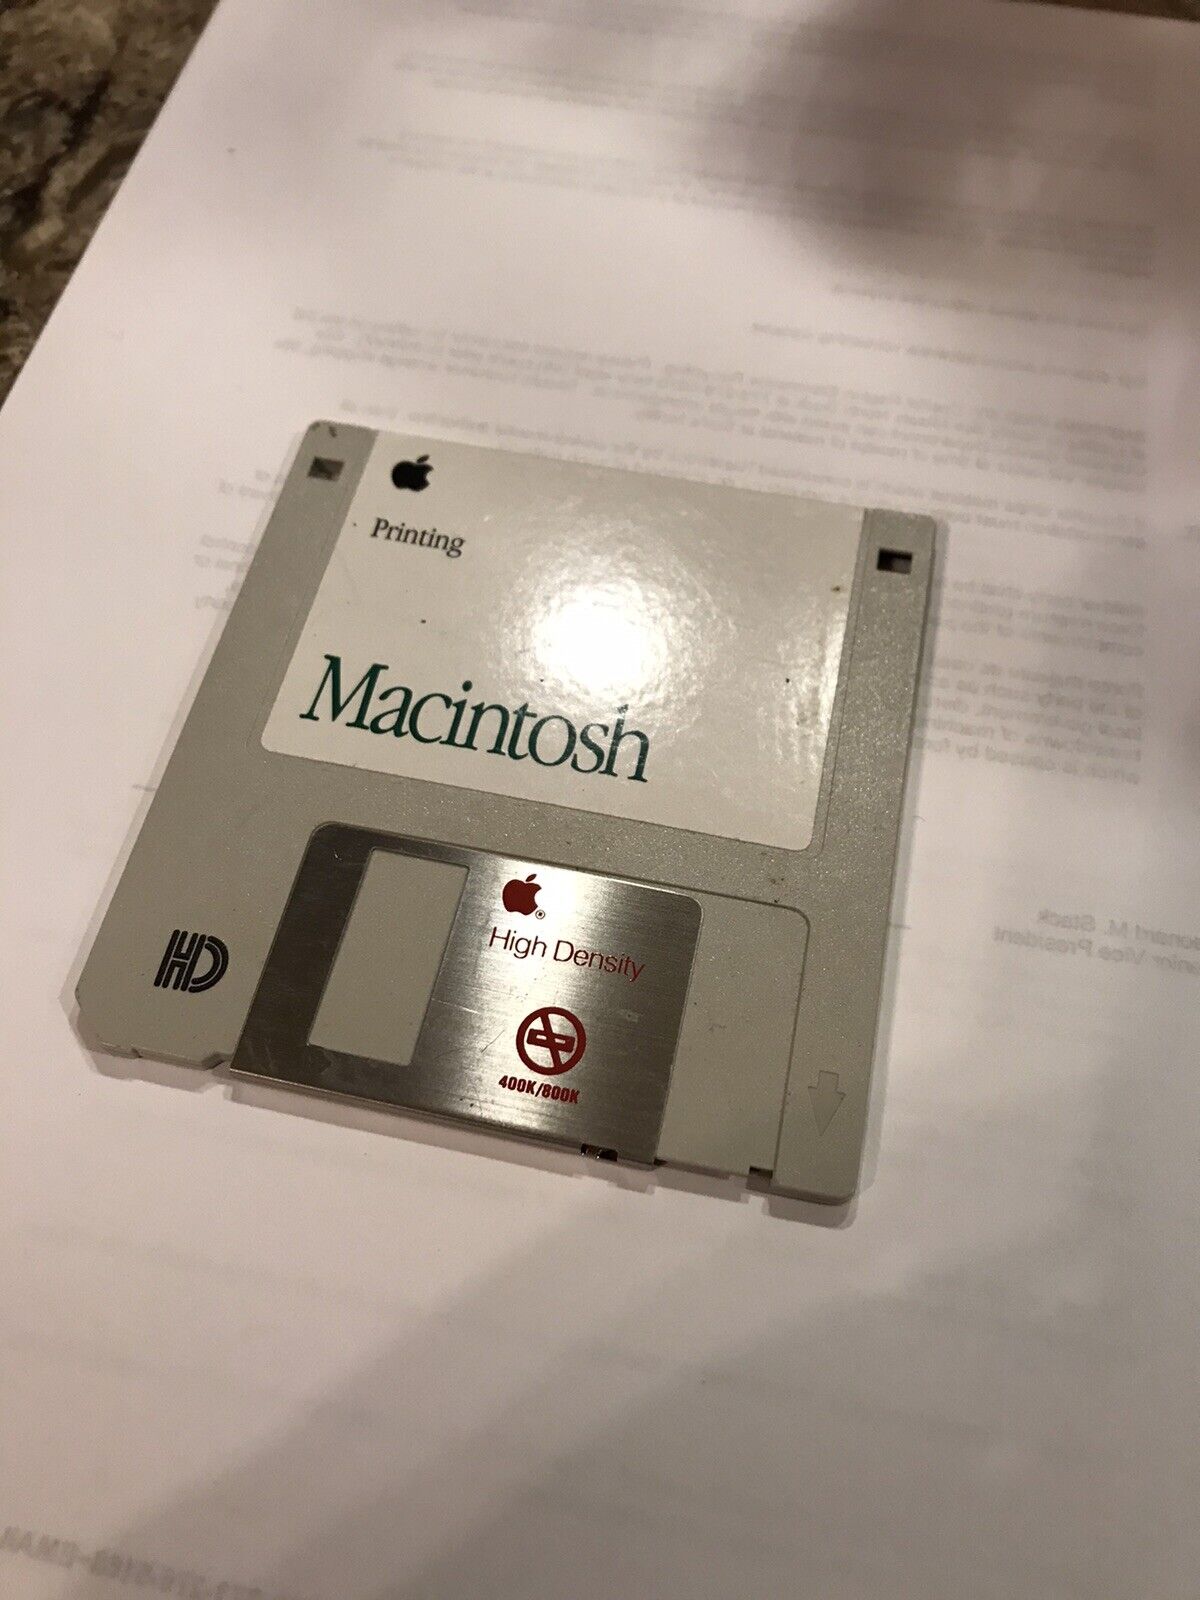 Vintage Apple Macintosh Printing Disk Utility Drivers Version 7.0.1 Circa 1991